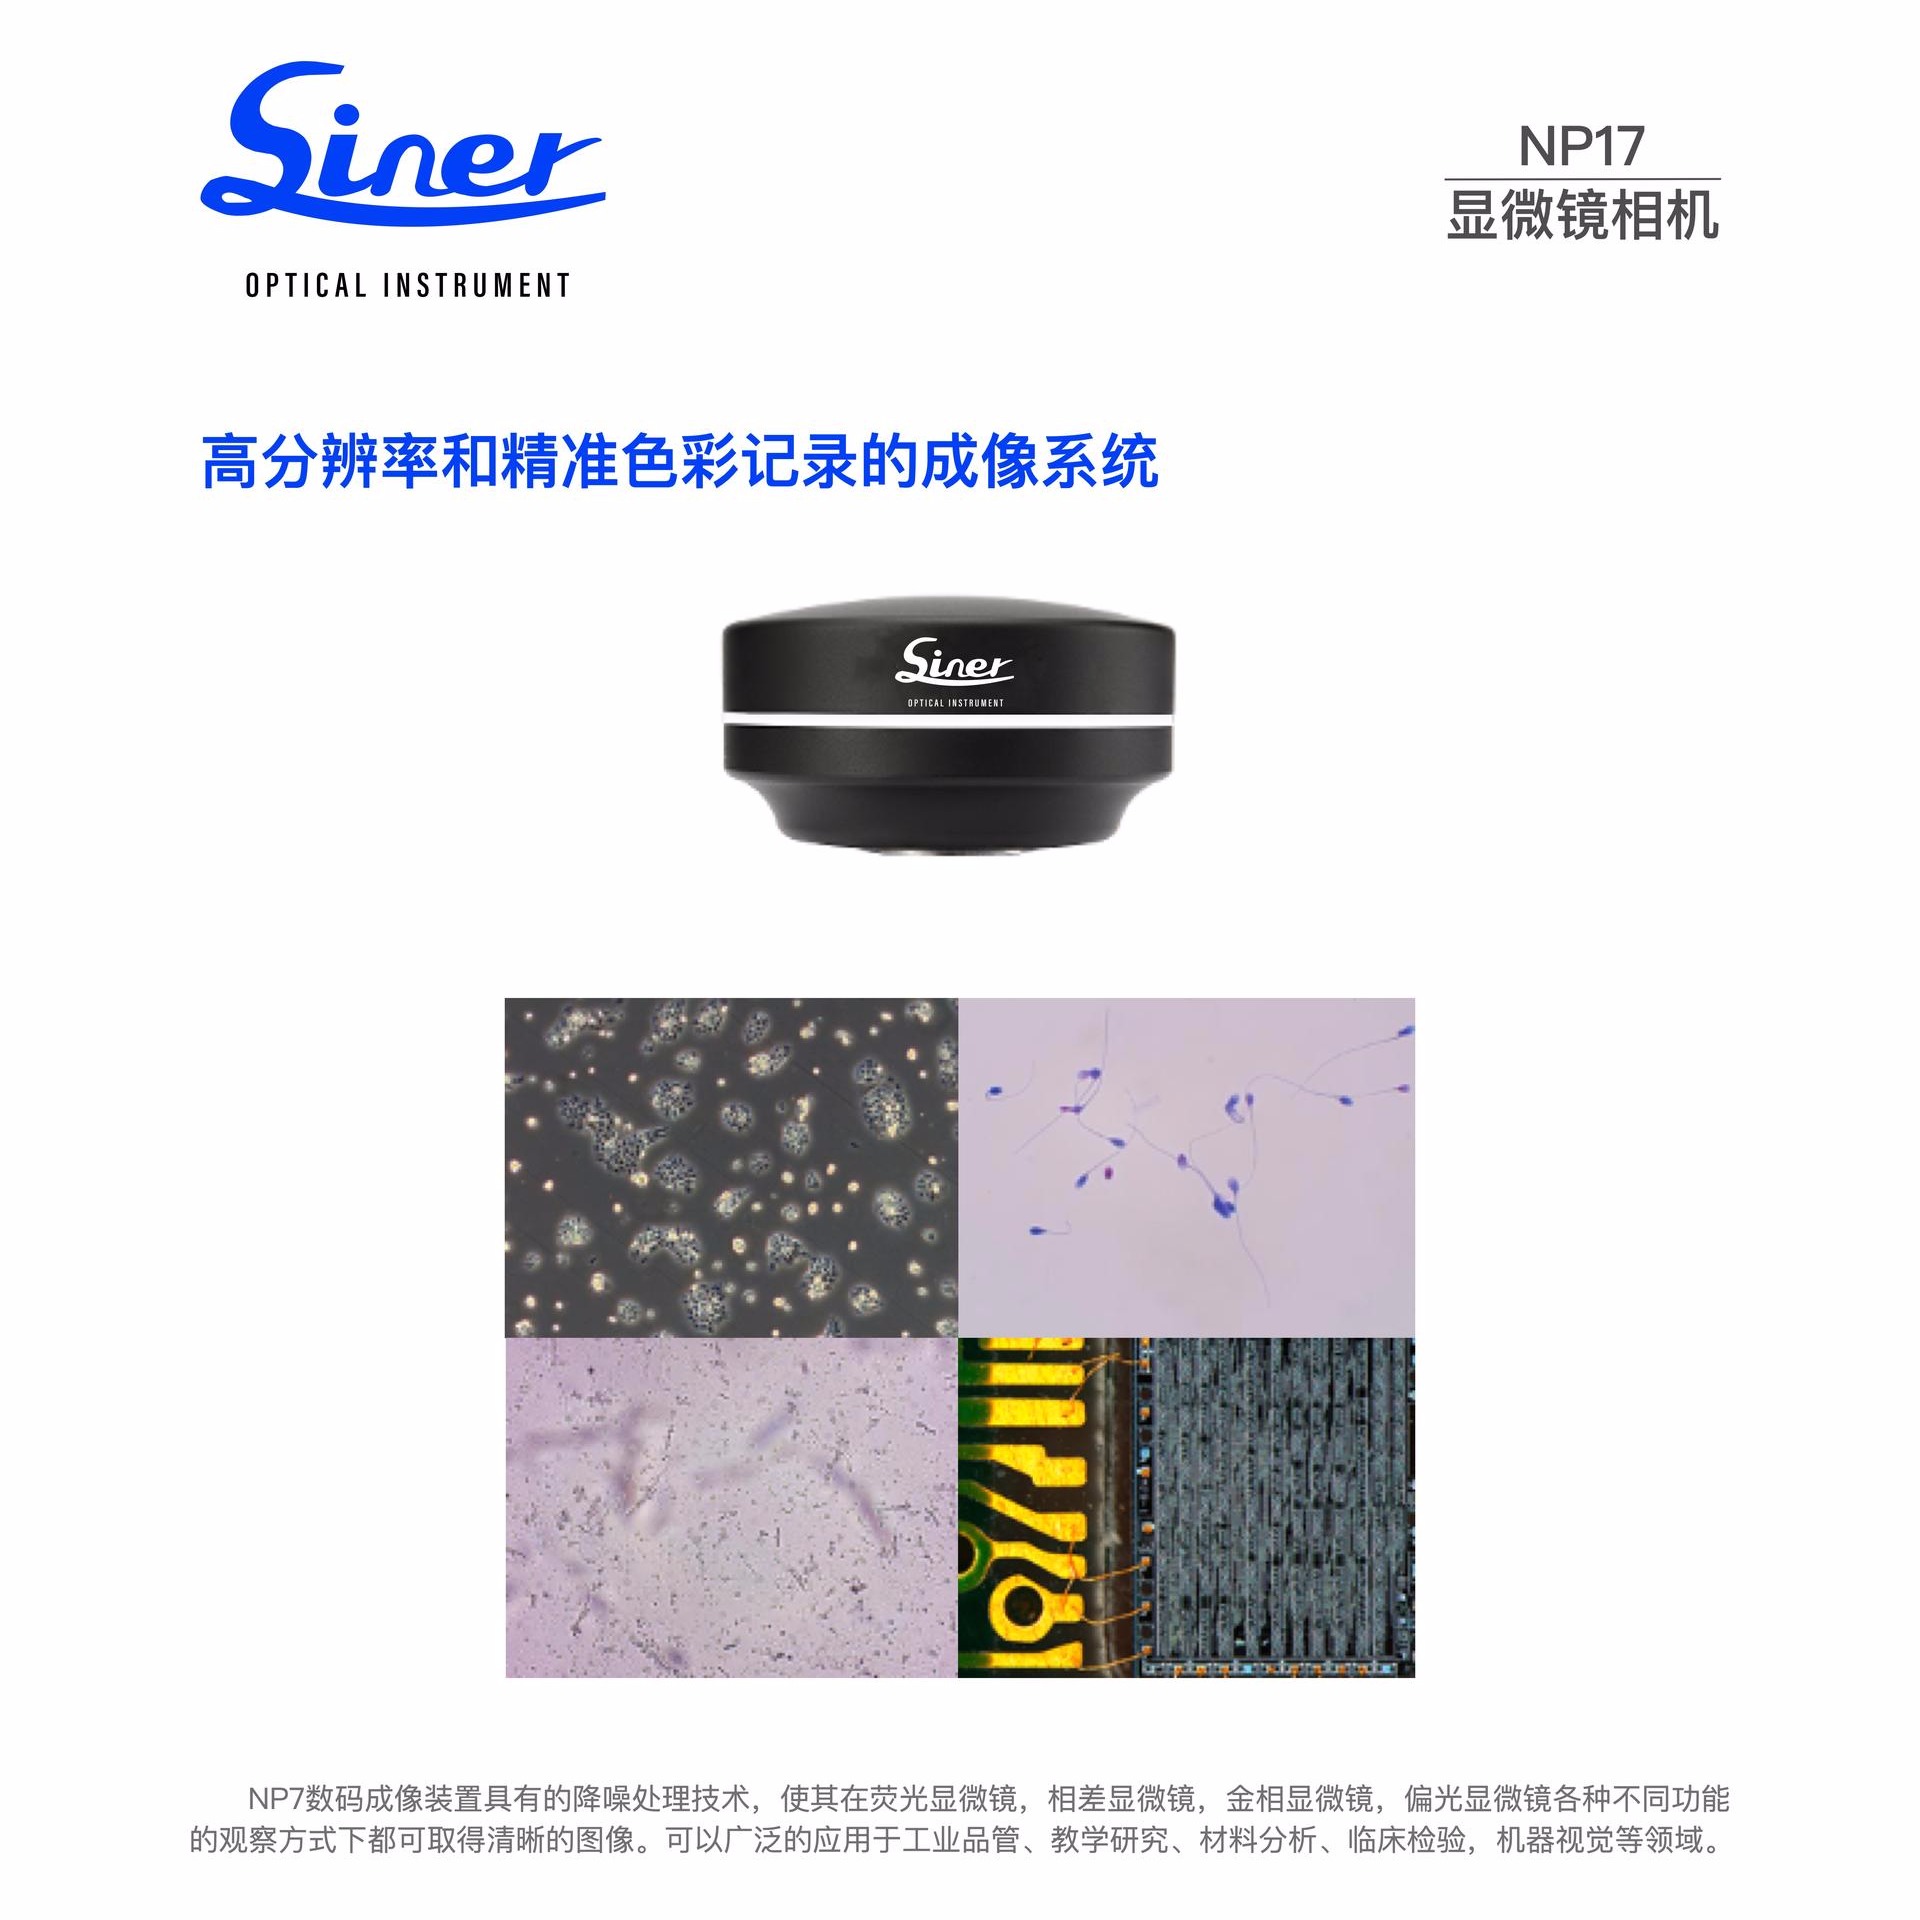 Siner 显微镜相机 NP17 现货供应  高分辨率和精准色彩记录的成像系统  Siner价格